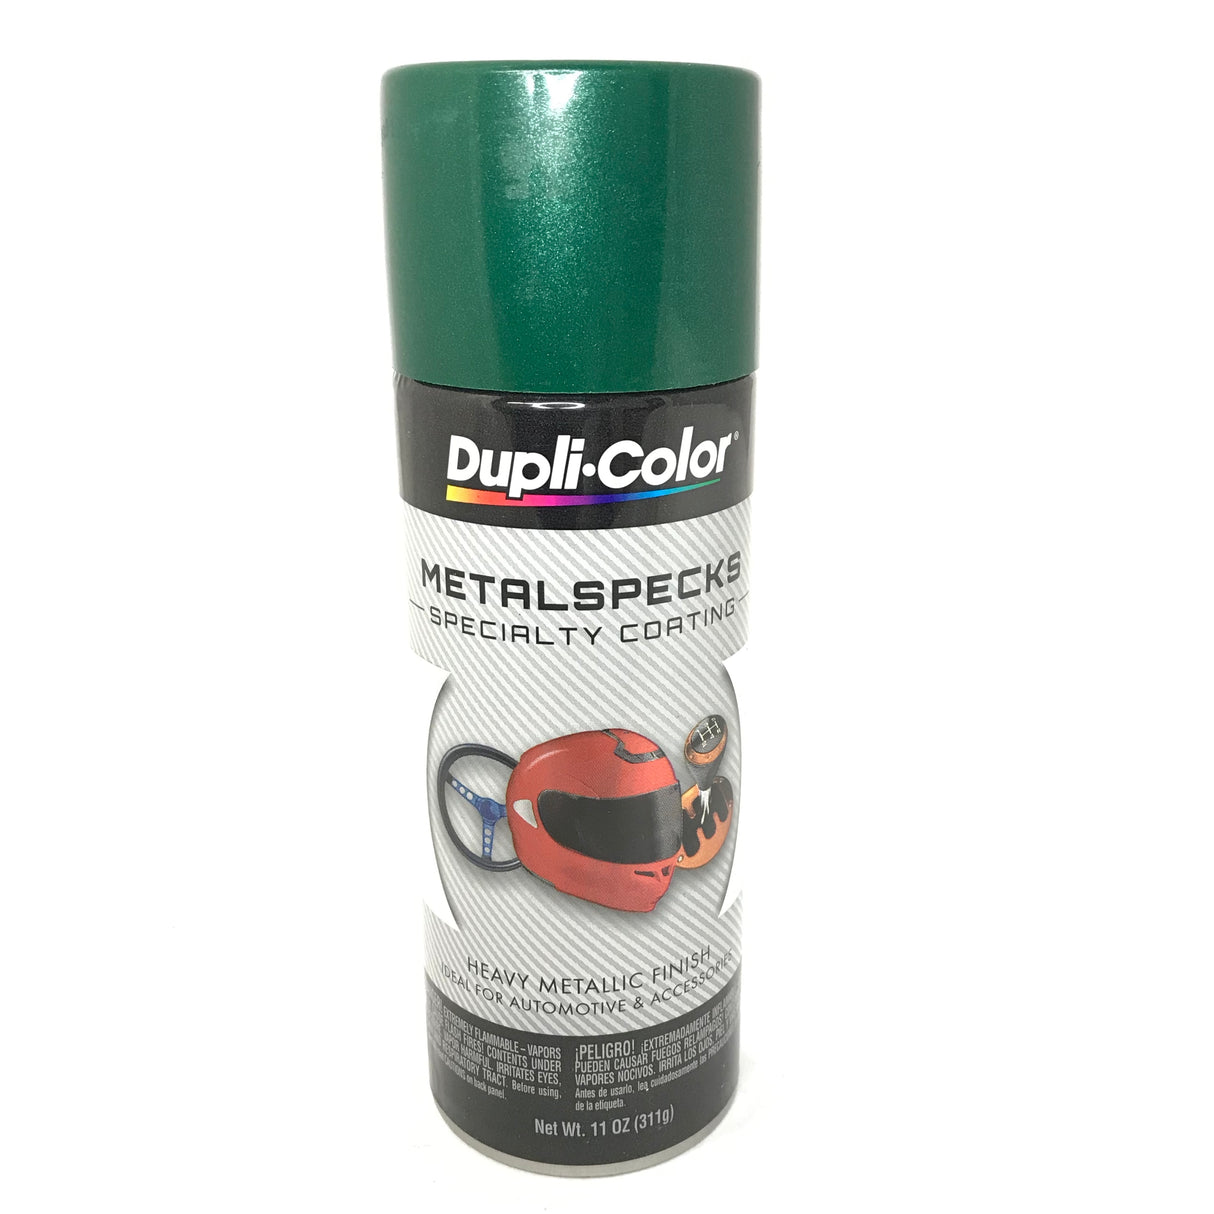 Duplicolor MS500 SHIMMERING GREEN Metalspecks Specialty Coating - Heavy Metallic Finish - 11 oz